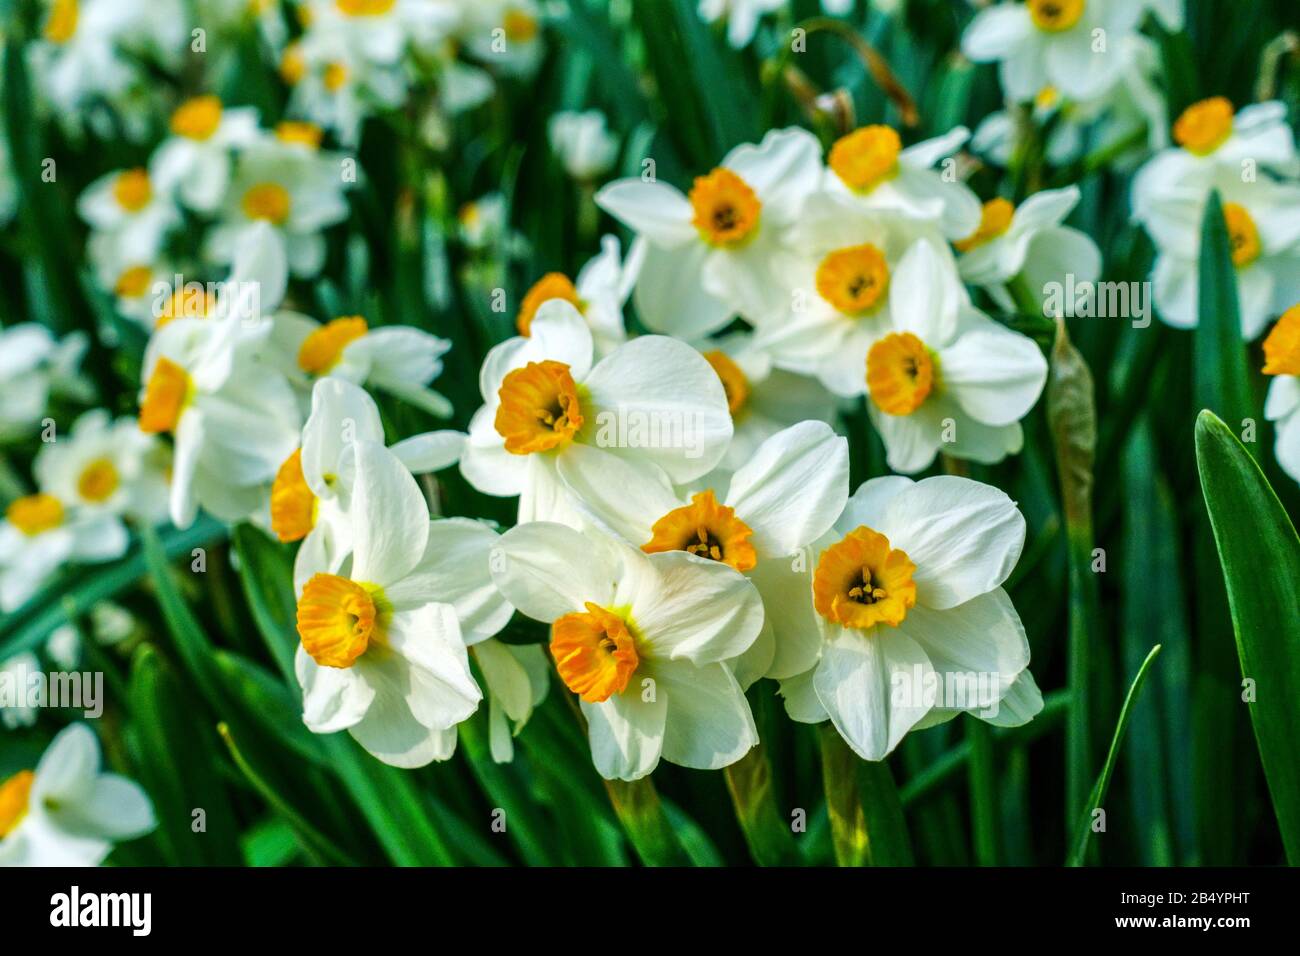 Narcissus 'Geranium' Daffodils Stock Photo